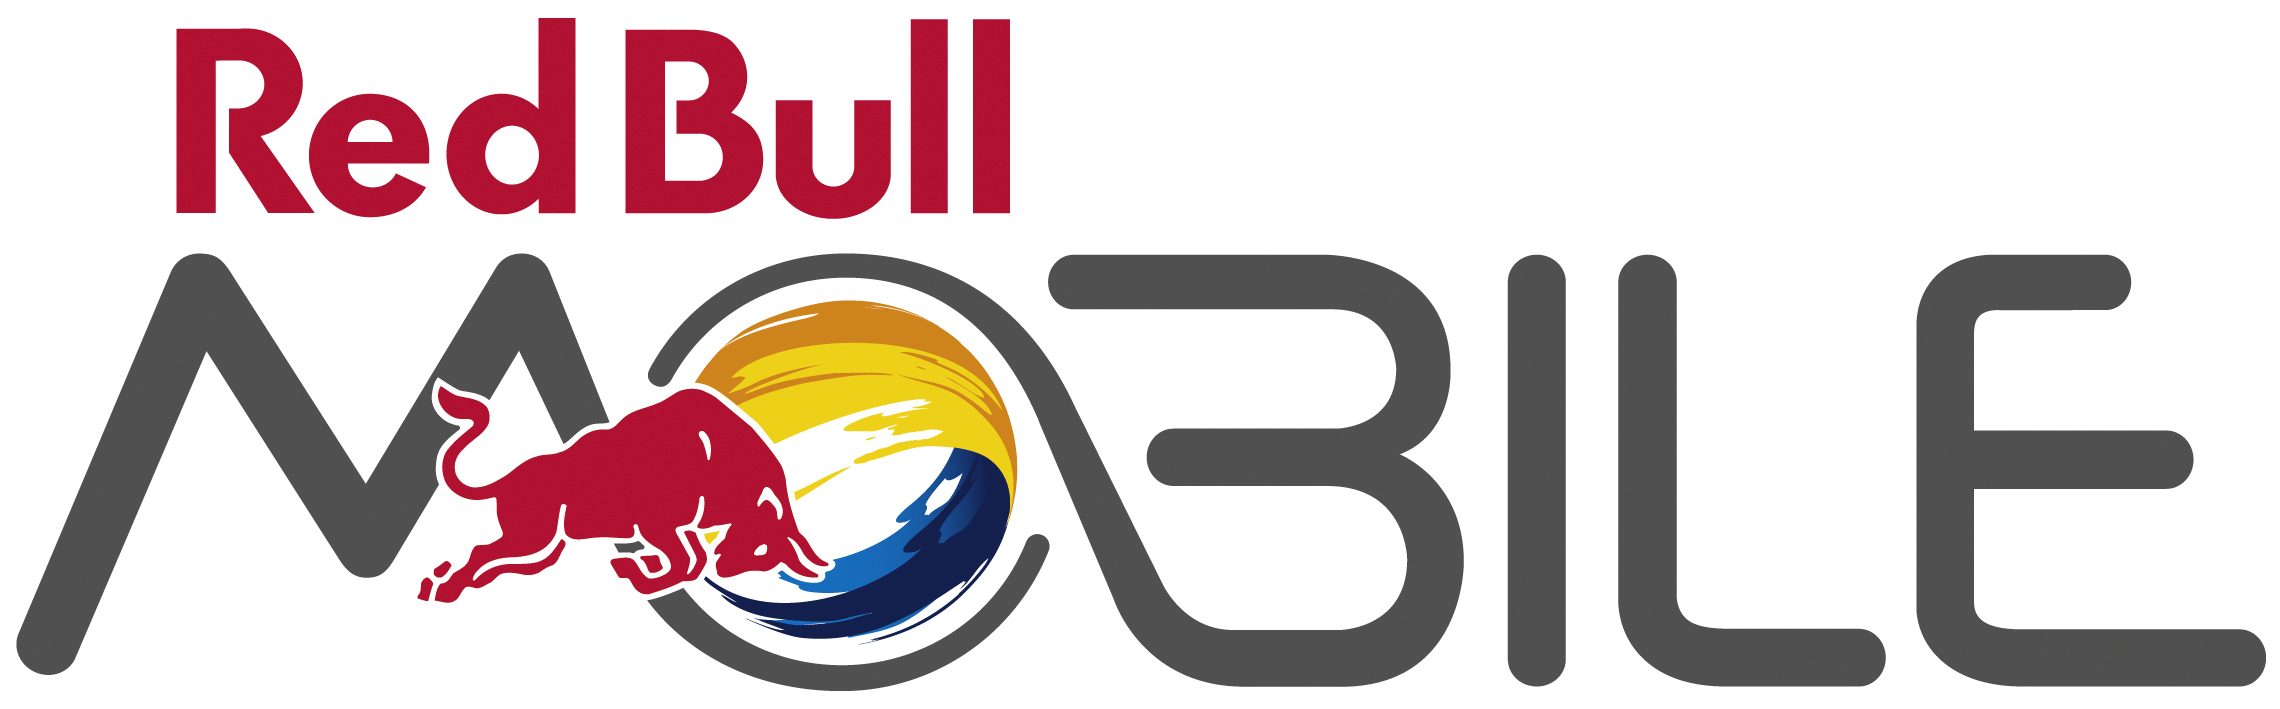 Red bull mobile. Ред Булл мобайл лого. Red bull Racing logo. Логотип Nova mobile.